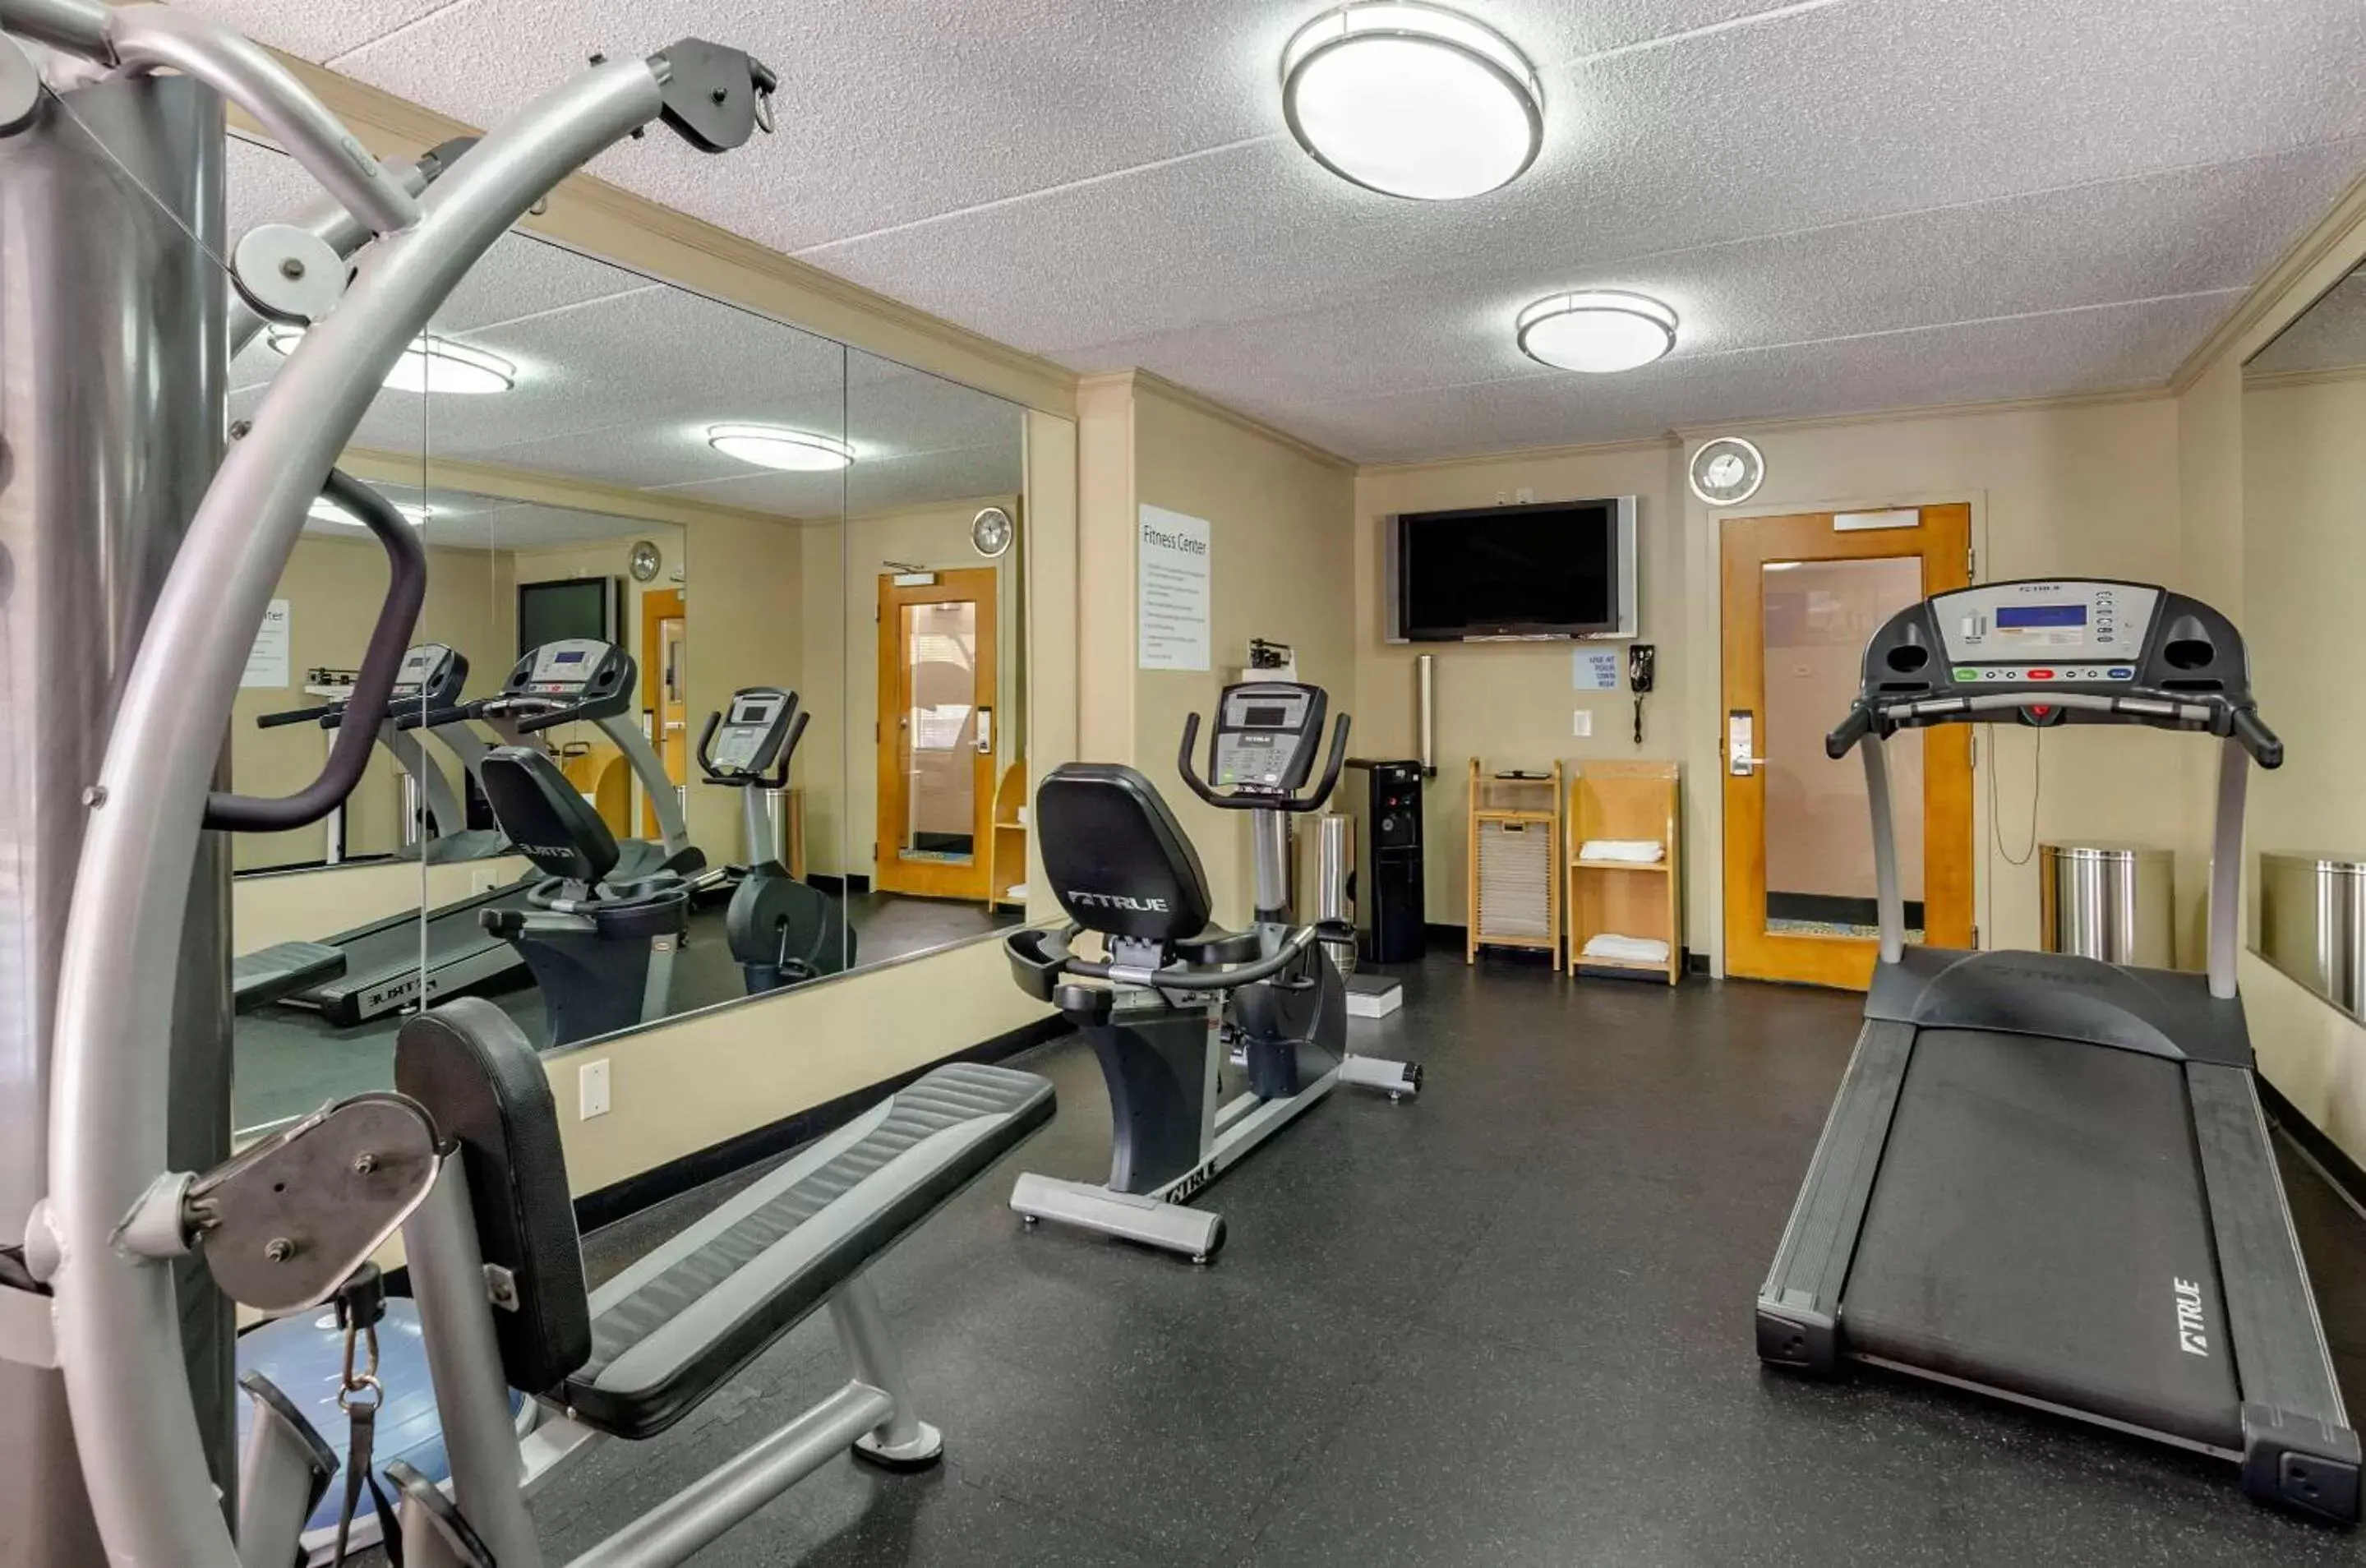 Fitness centre/facilities, Fitness Center/Facilities in Comfort Inn Roanoke Civic Center